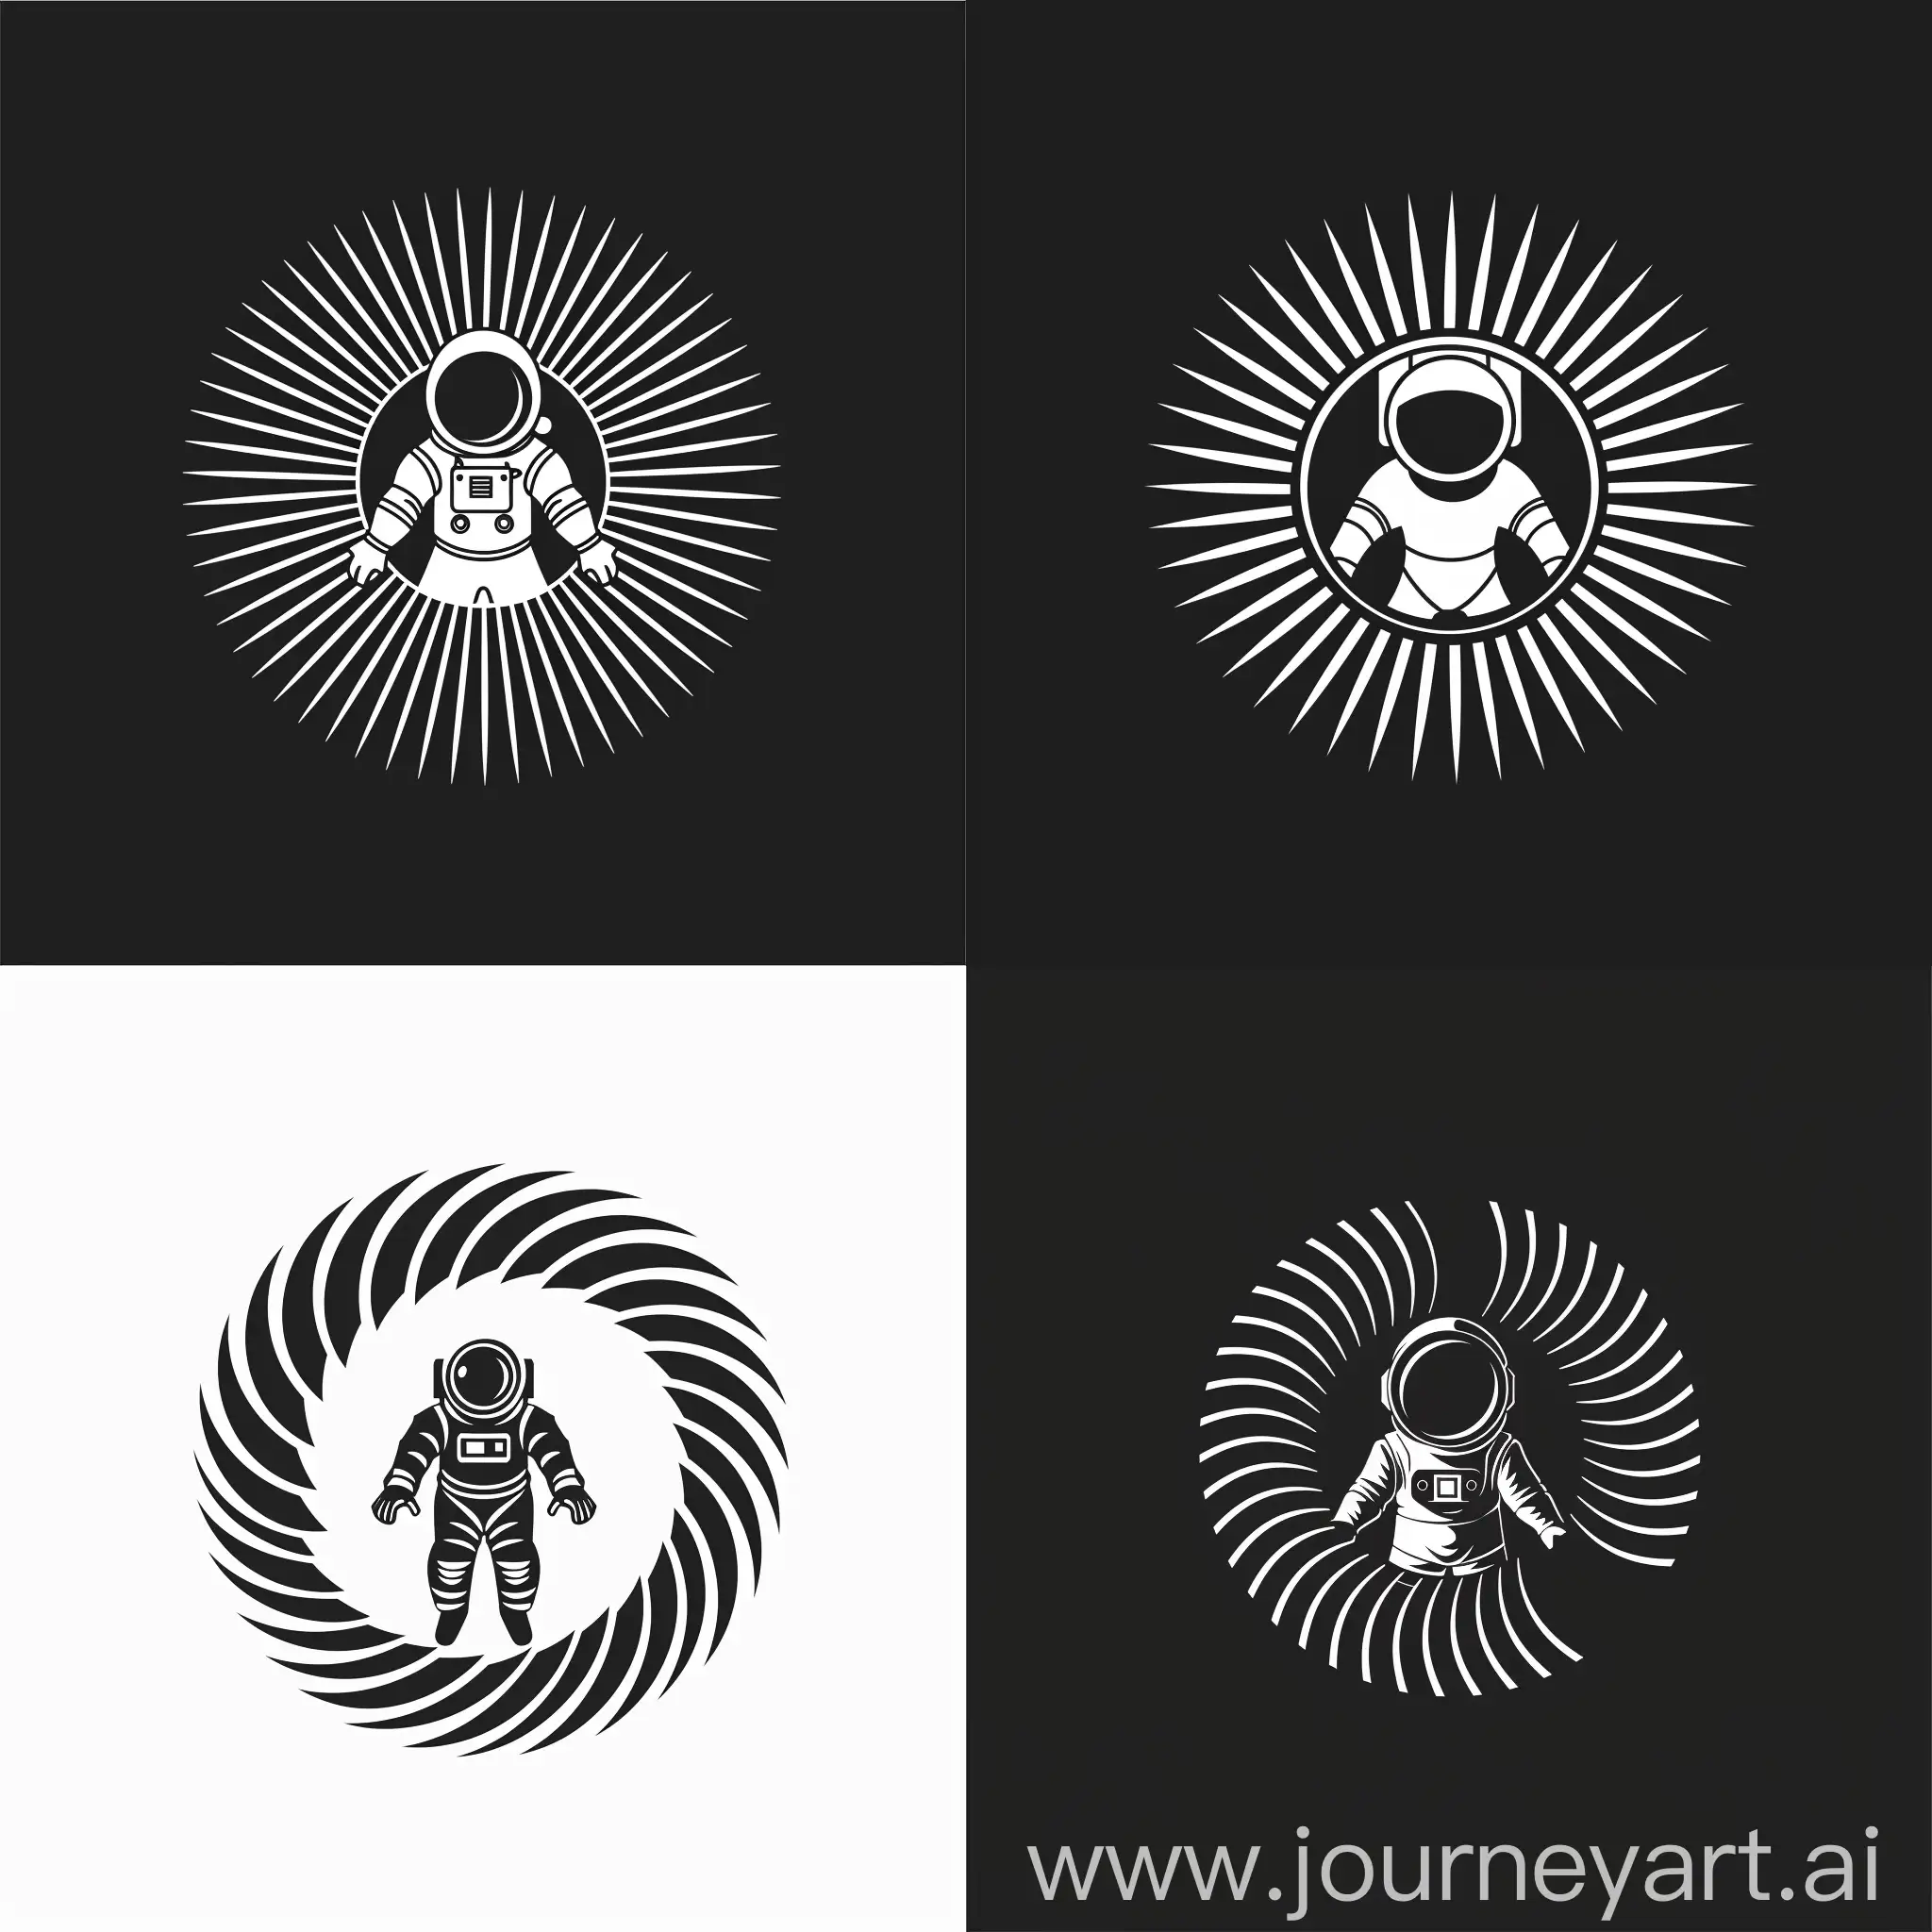 Stylized-Astronaut-Logo-with-Fan-Blade-Circle